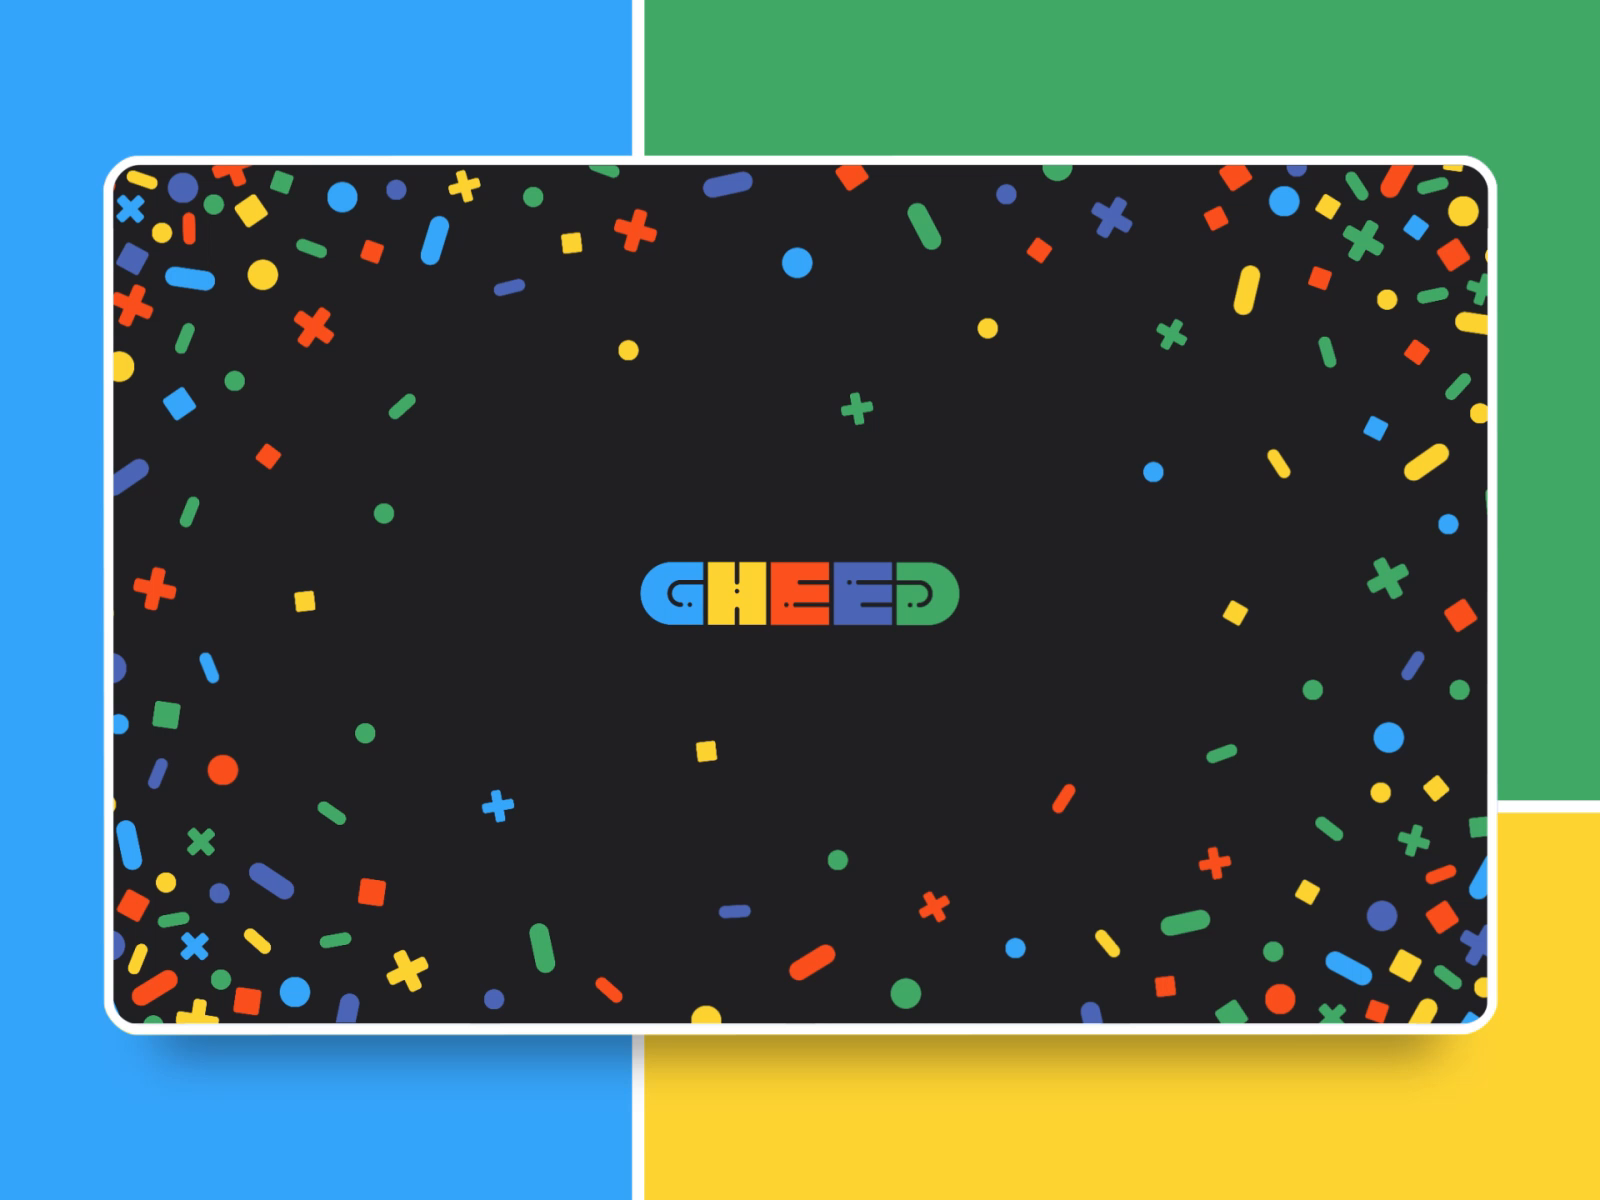 gheed-logo-animation-by-philipp-apler-on-dribbble